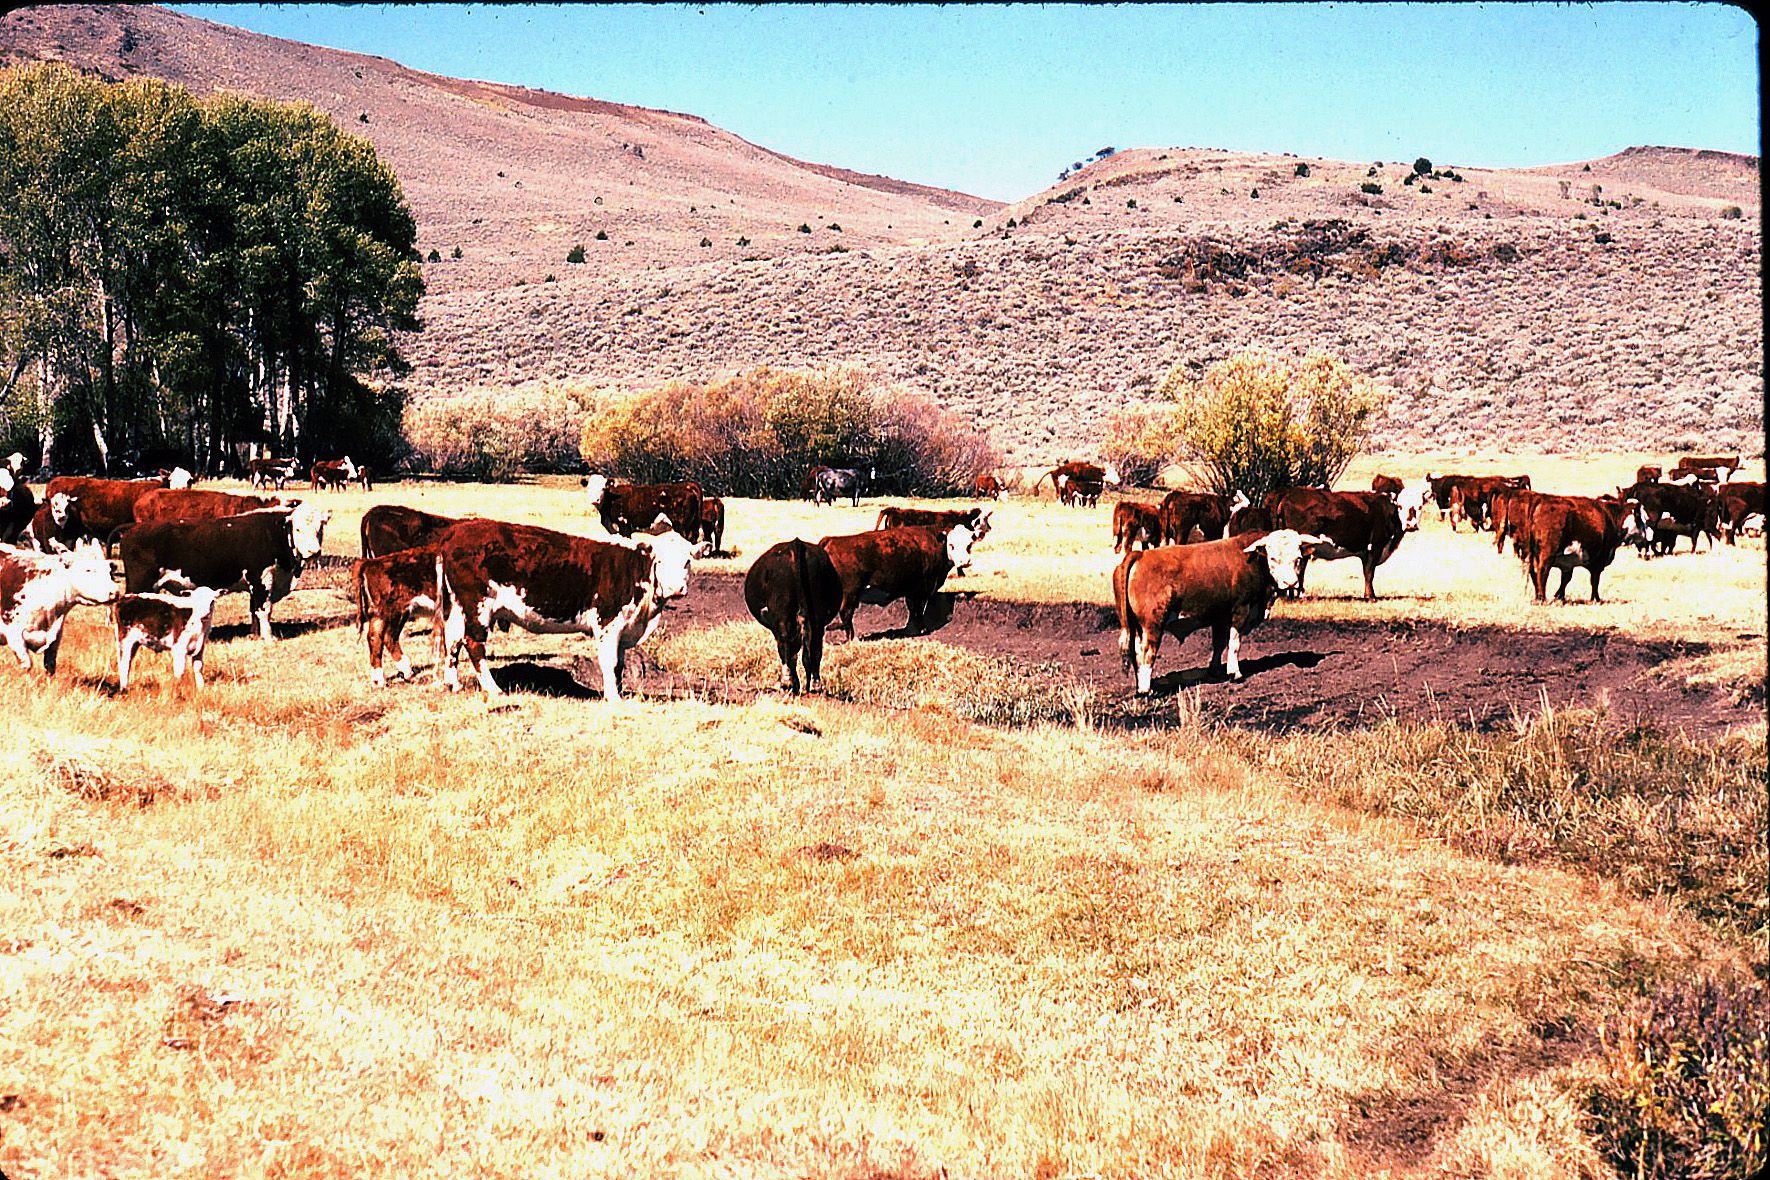 Mckee cattle in meadow - Oct. 1989